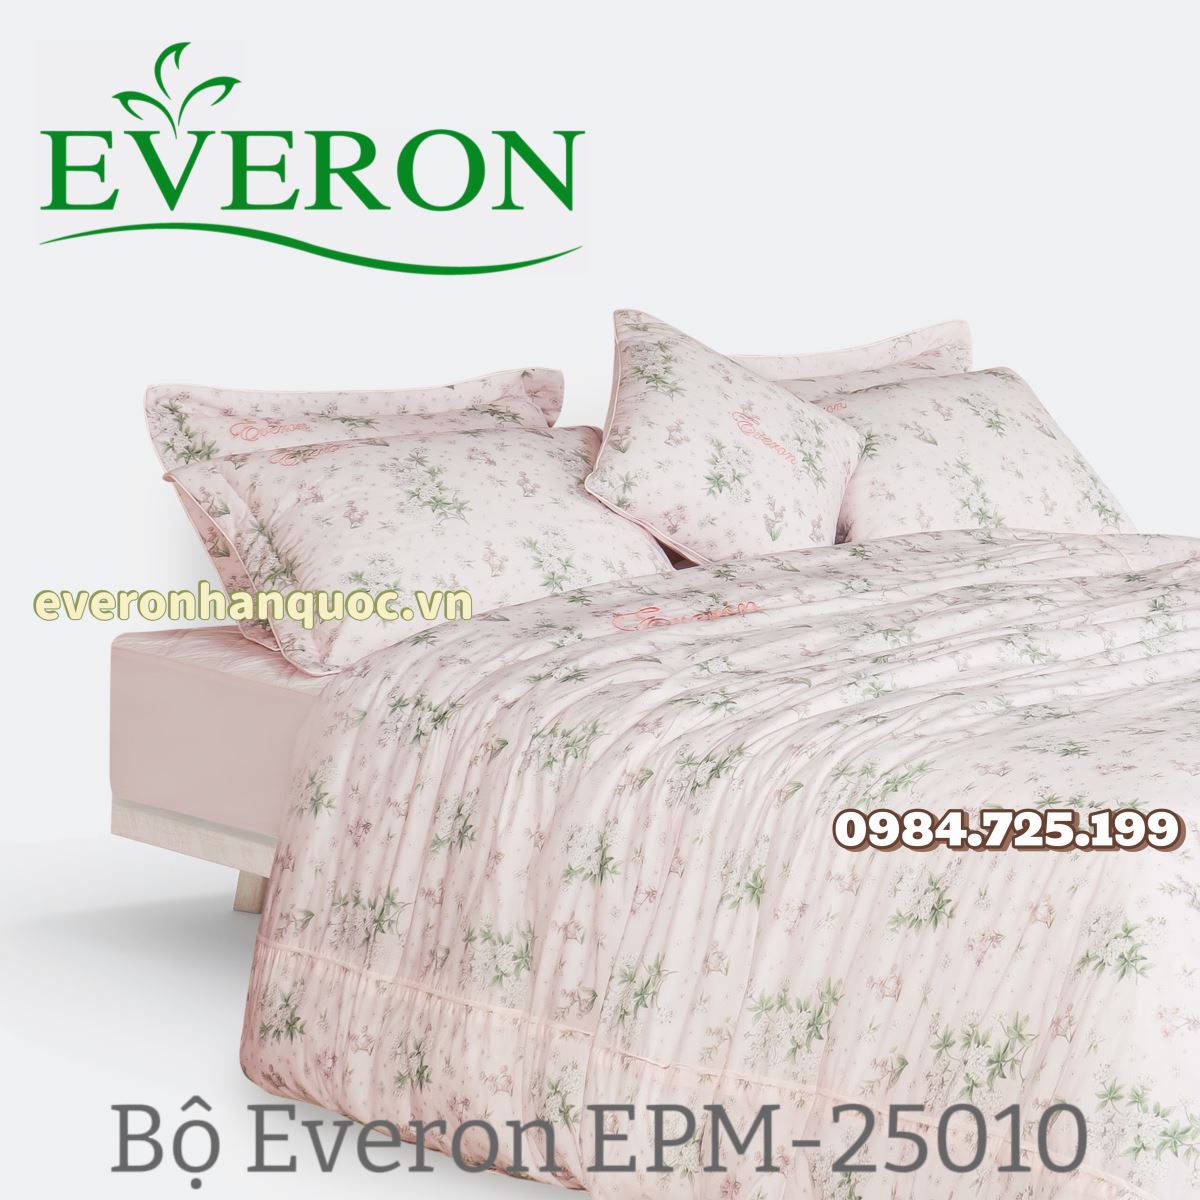 Bộ Everon EPM-25010